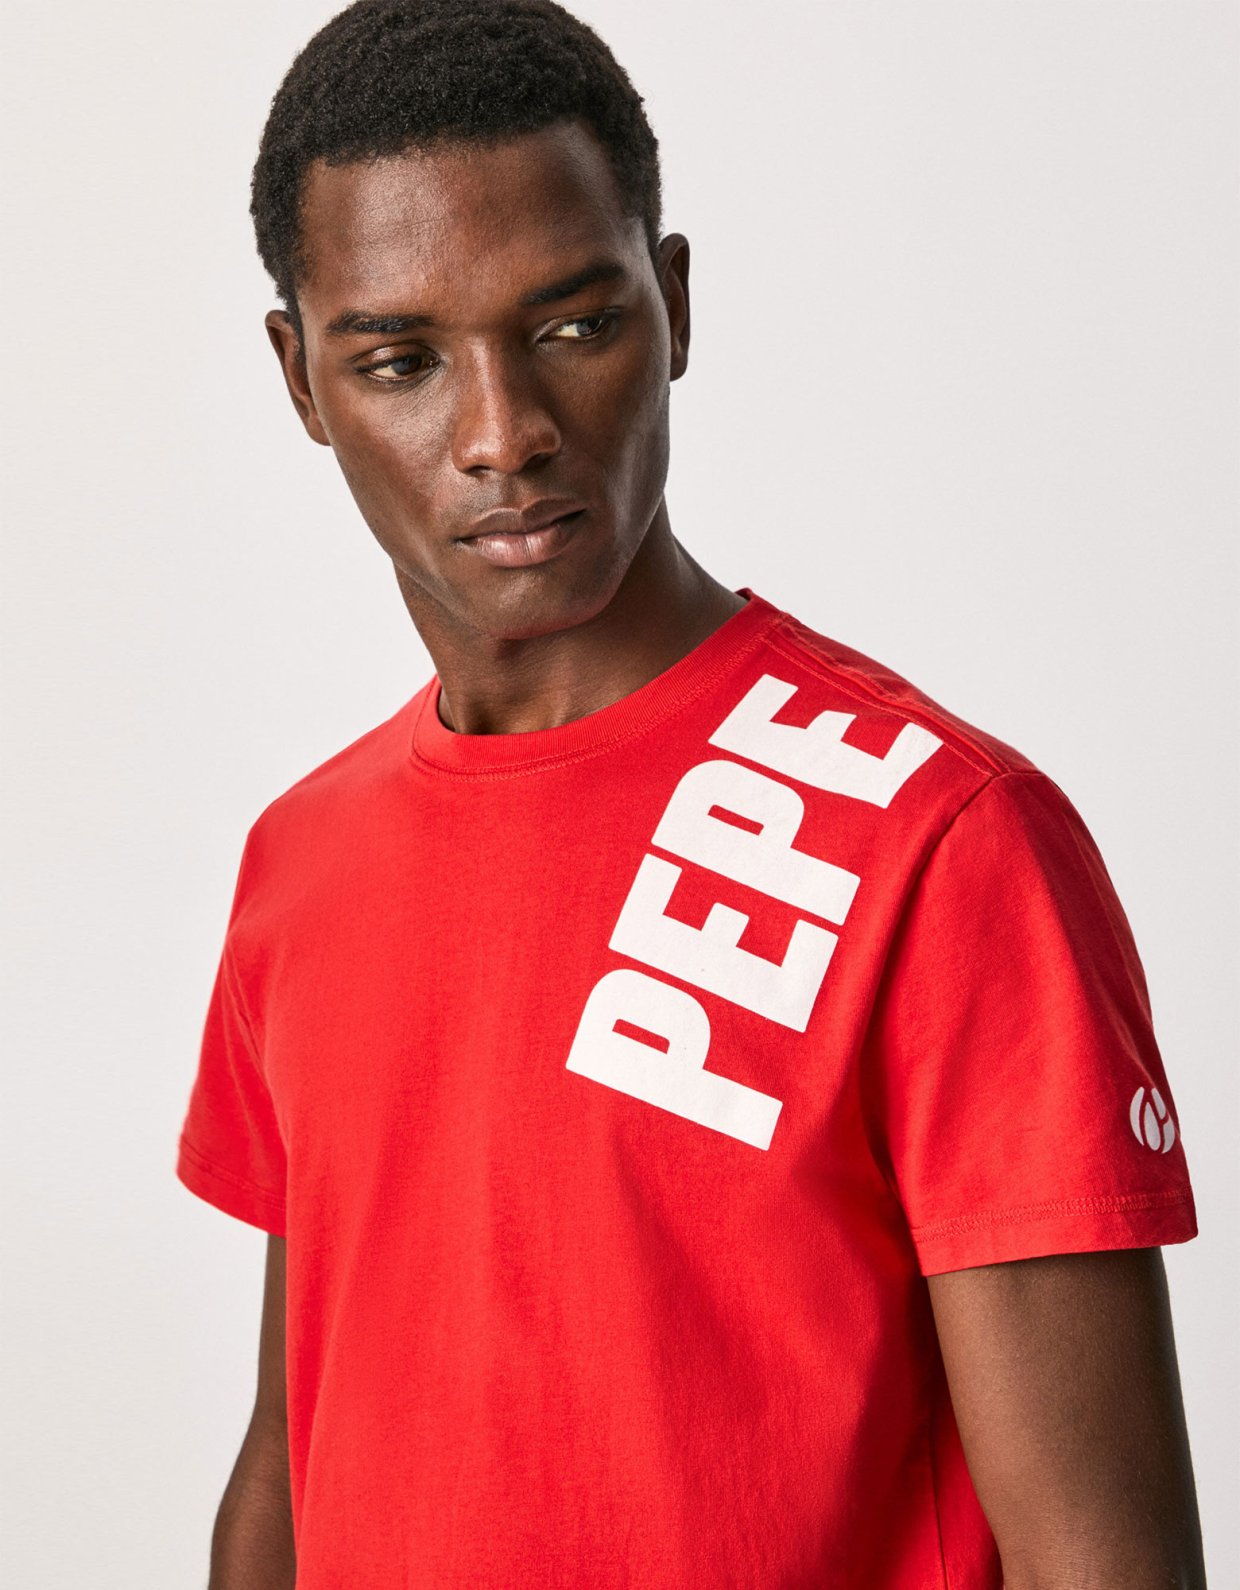 Pepe Jeans Aerol big logo t-shirt red